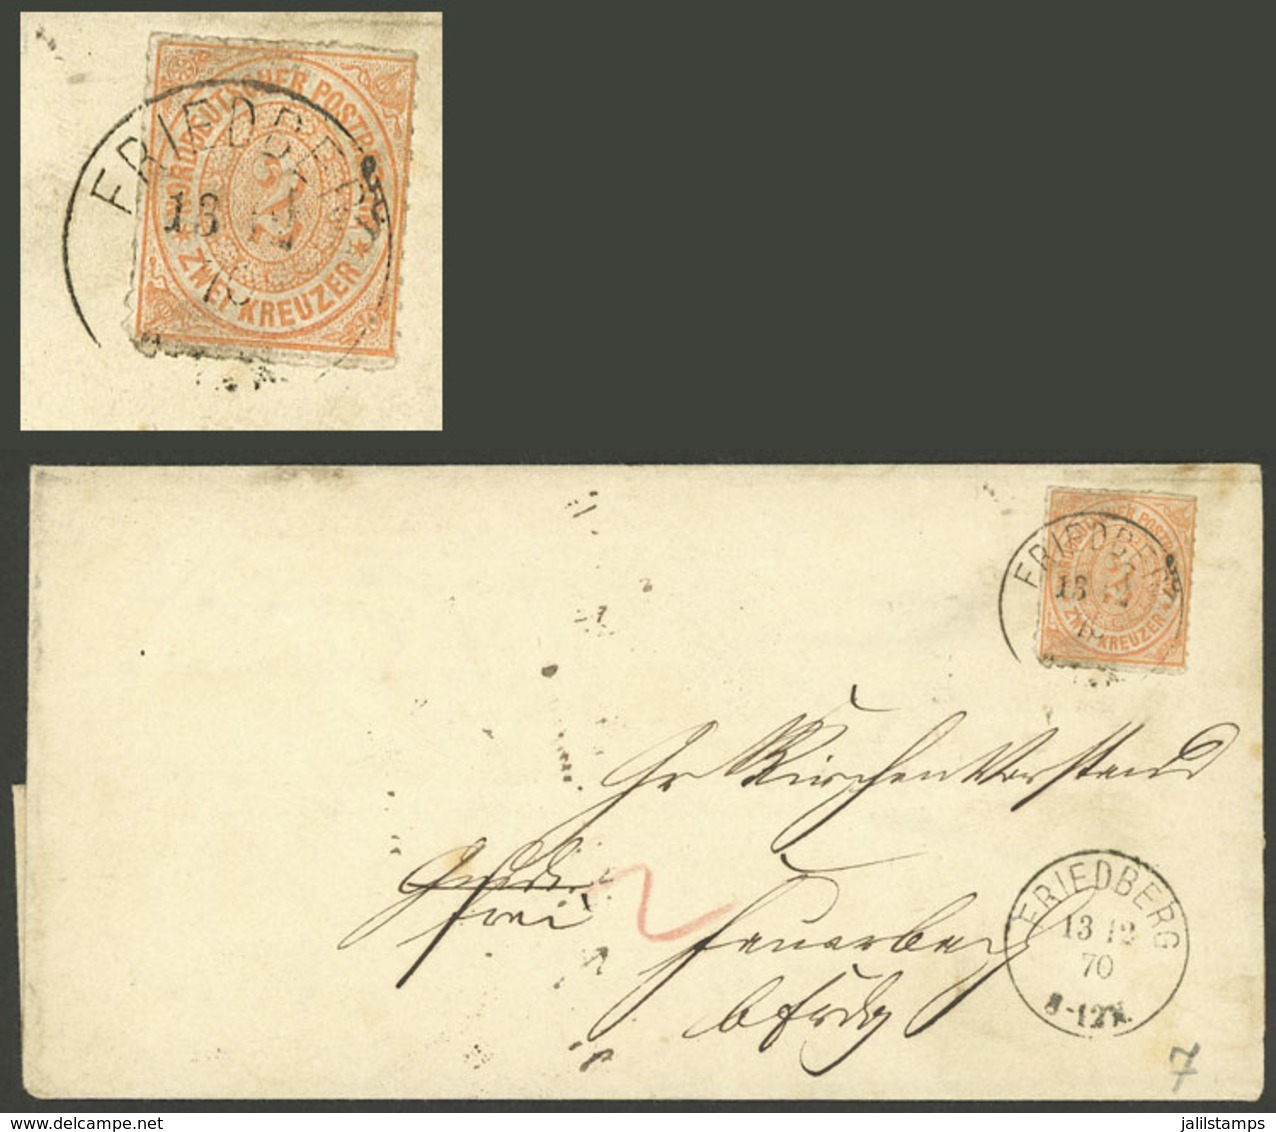 GERMANY: NORTH GERMAN CONFEDERATION: 13/DE/1870 Friedberg - ?, Folded Cover Franked By Sc.8 Alone, Very Nice! - Prefilatelia